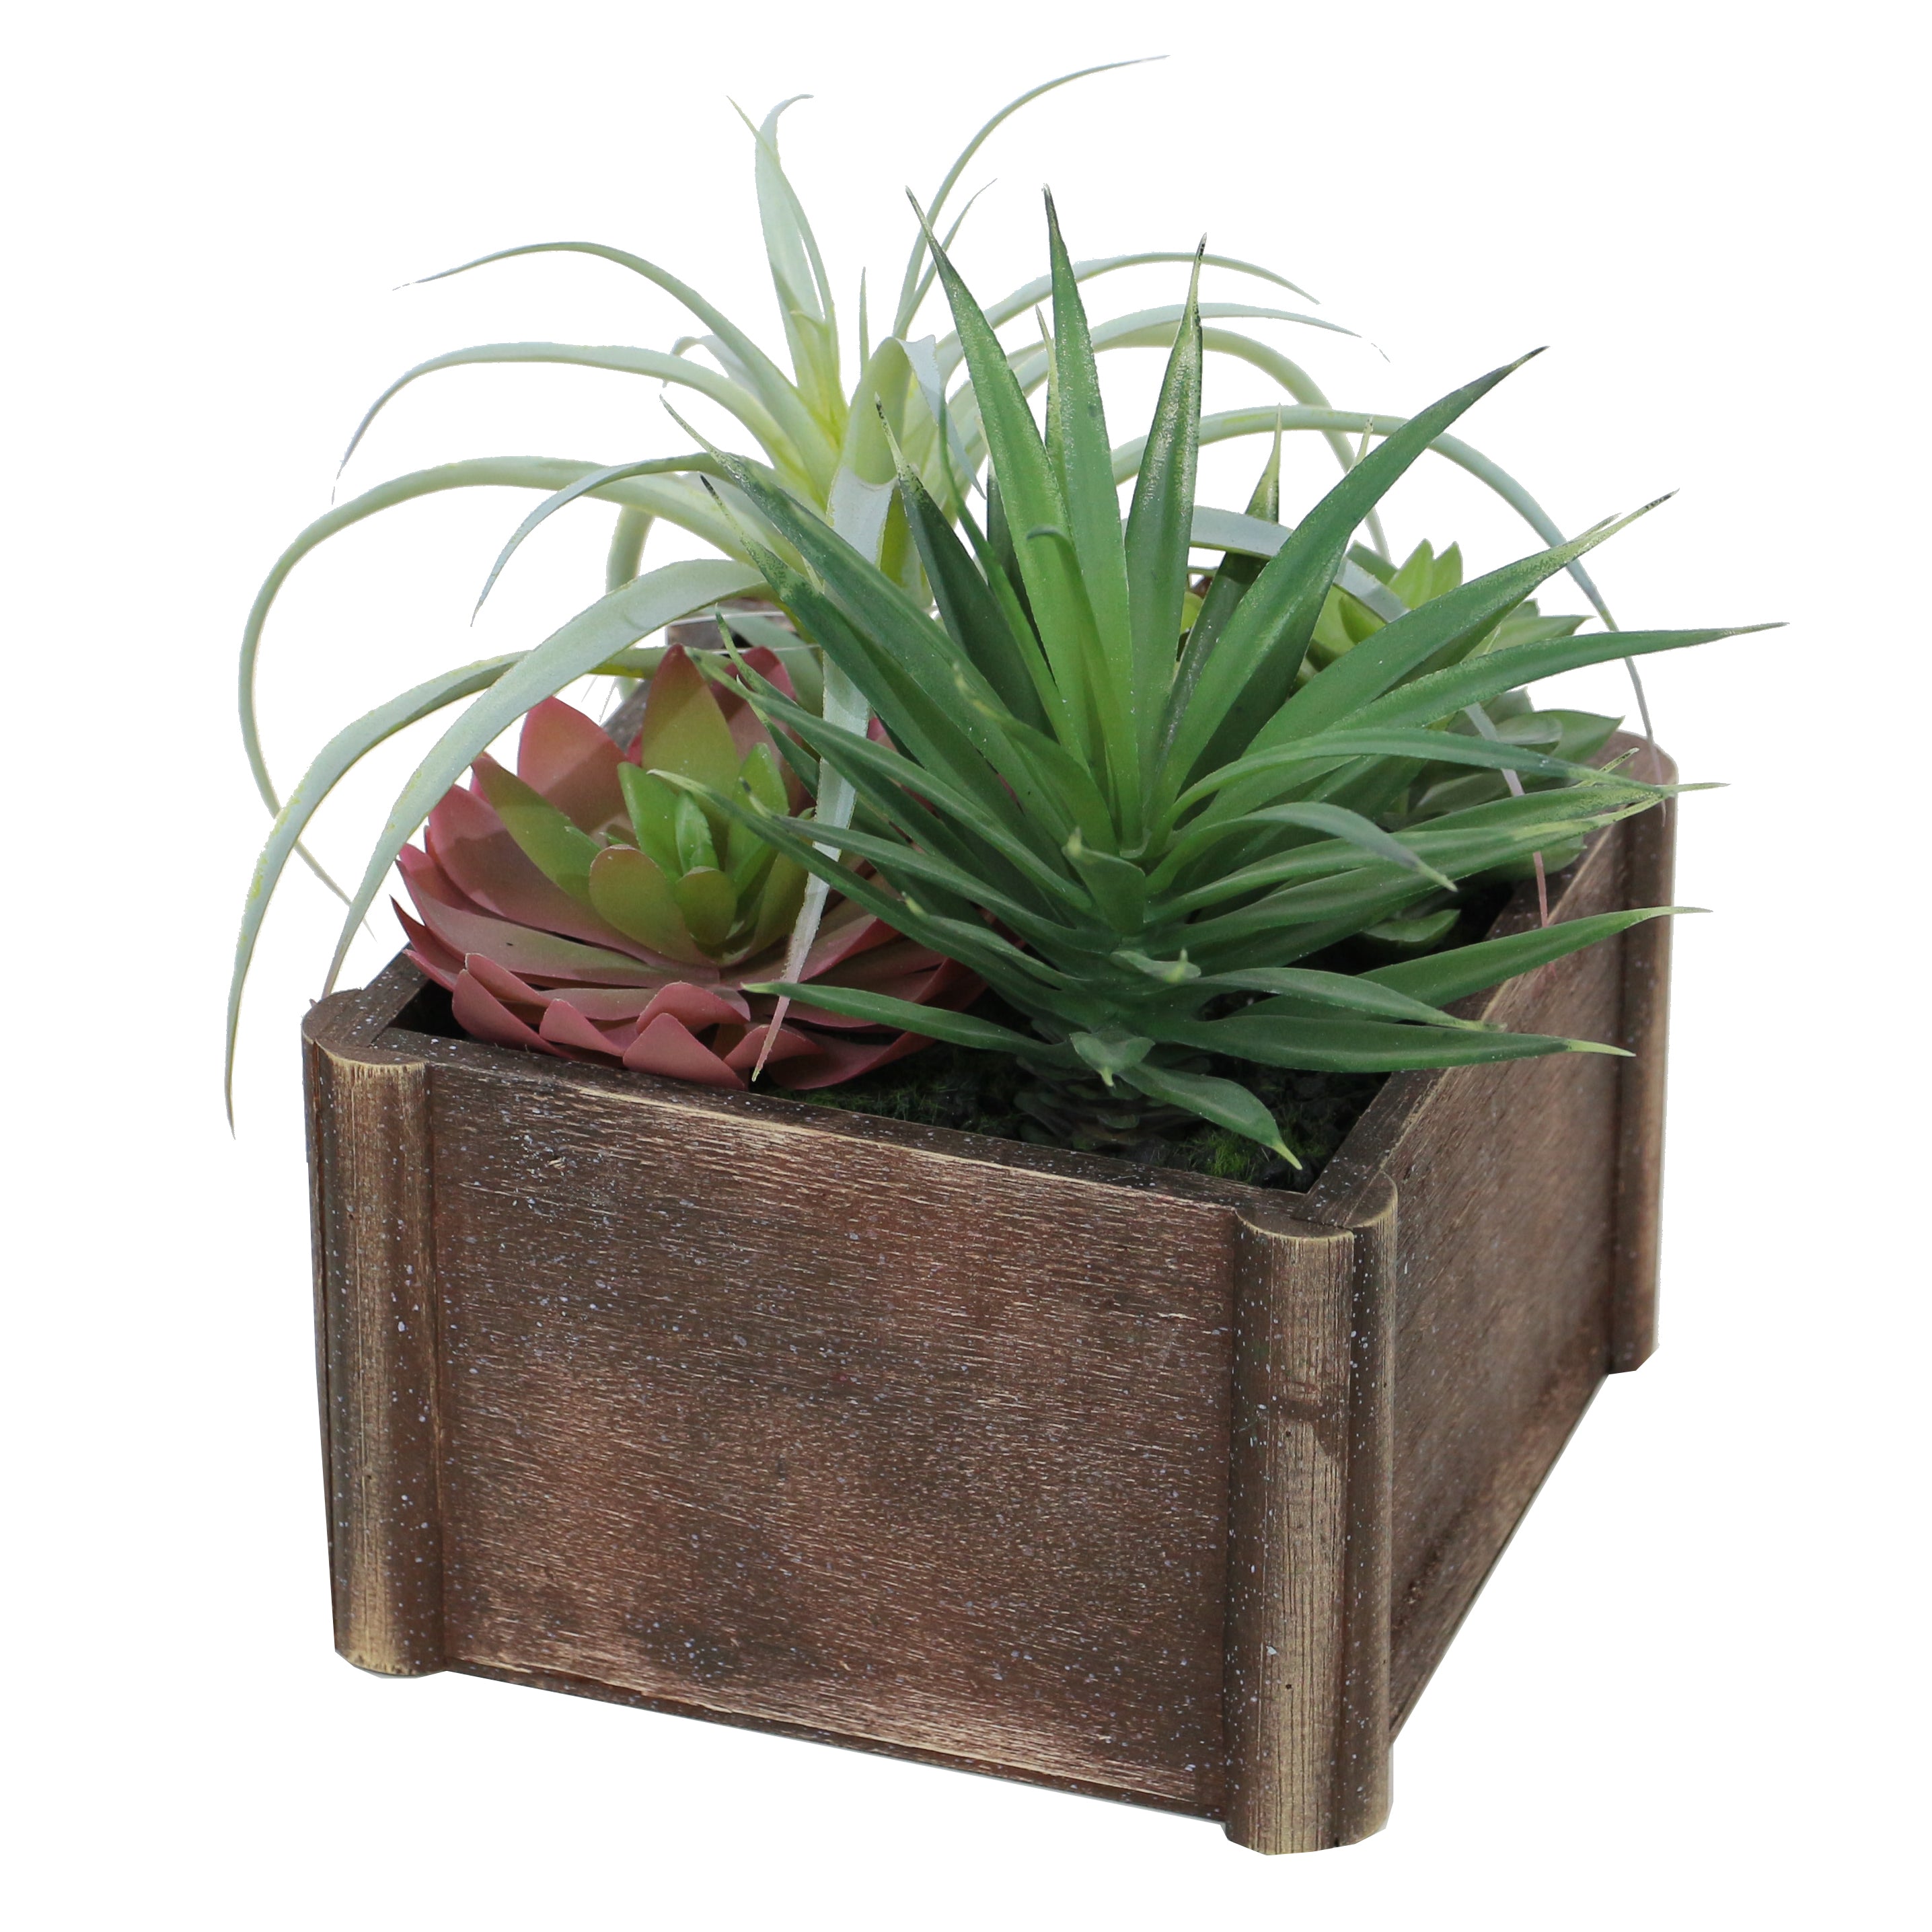 Desert Oasis Lifelike Plant in Rustic Wooden Pot